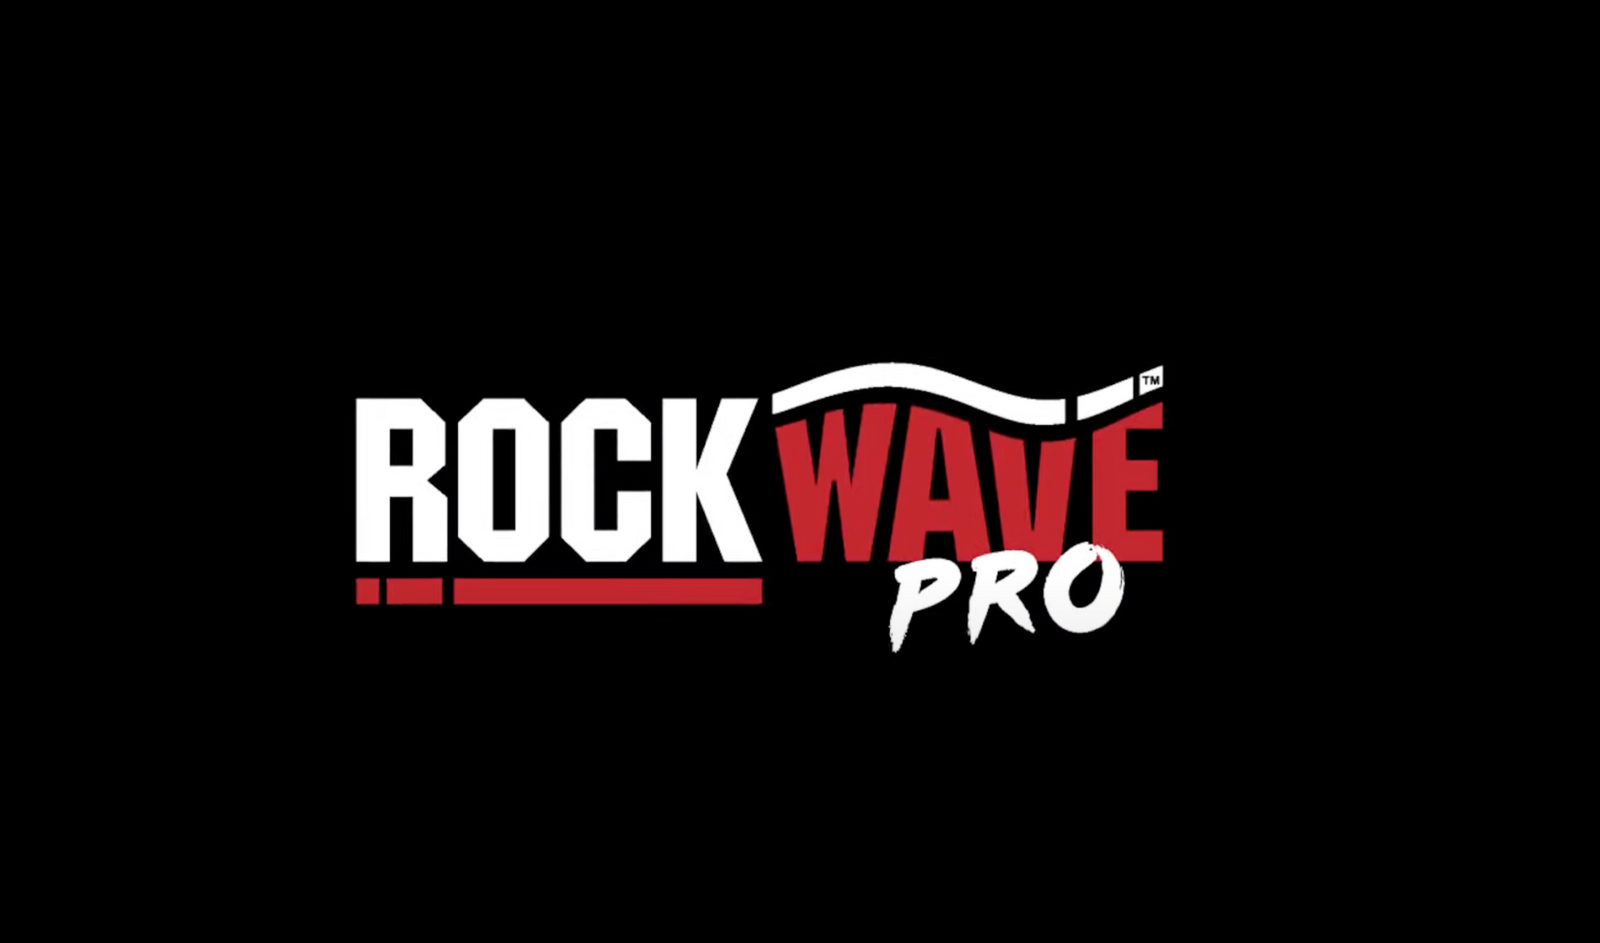 RockWave Pro video